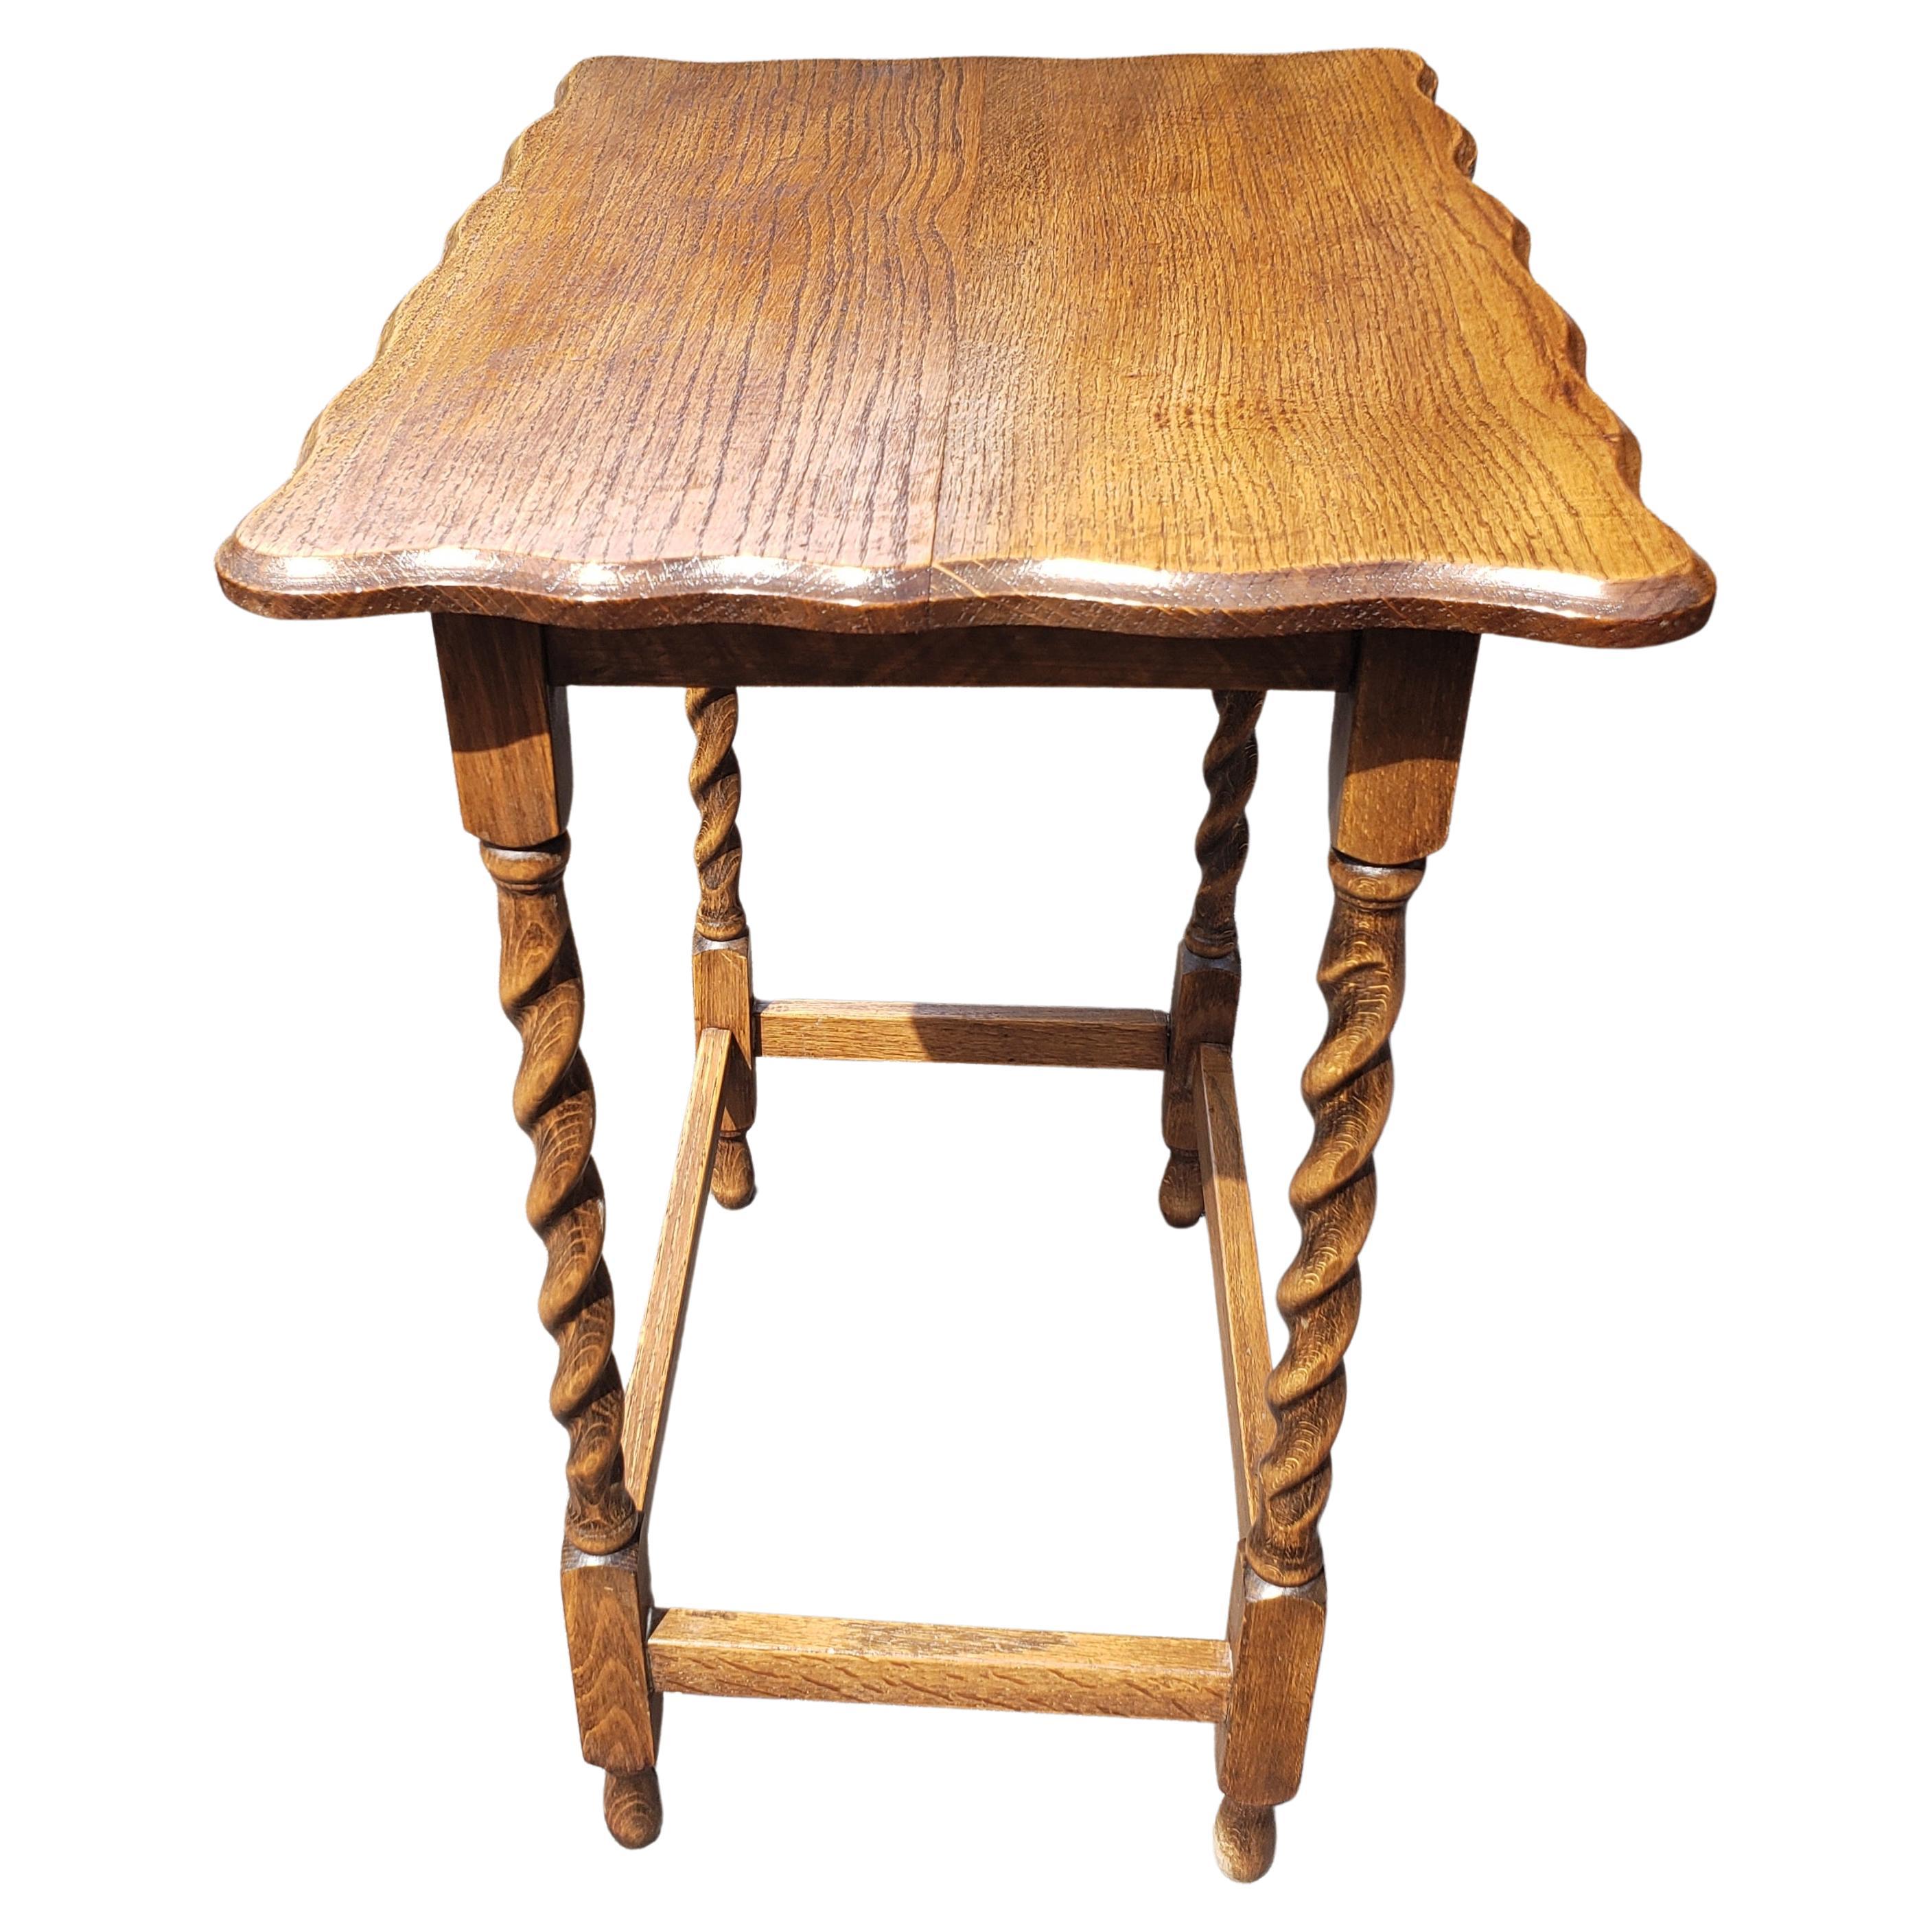 Edwardian Antique English Oak Occasional Side Table with Barley Twist Legs, Circa 1920s